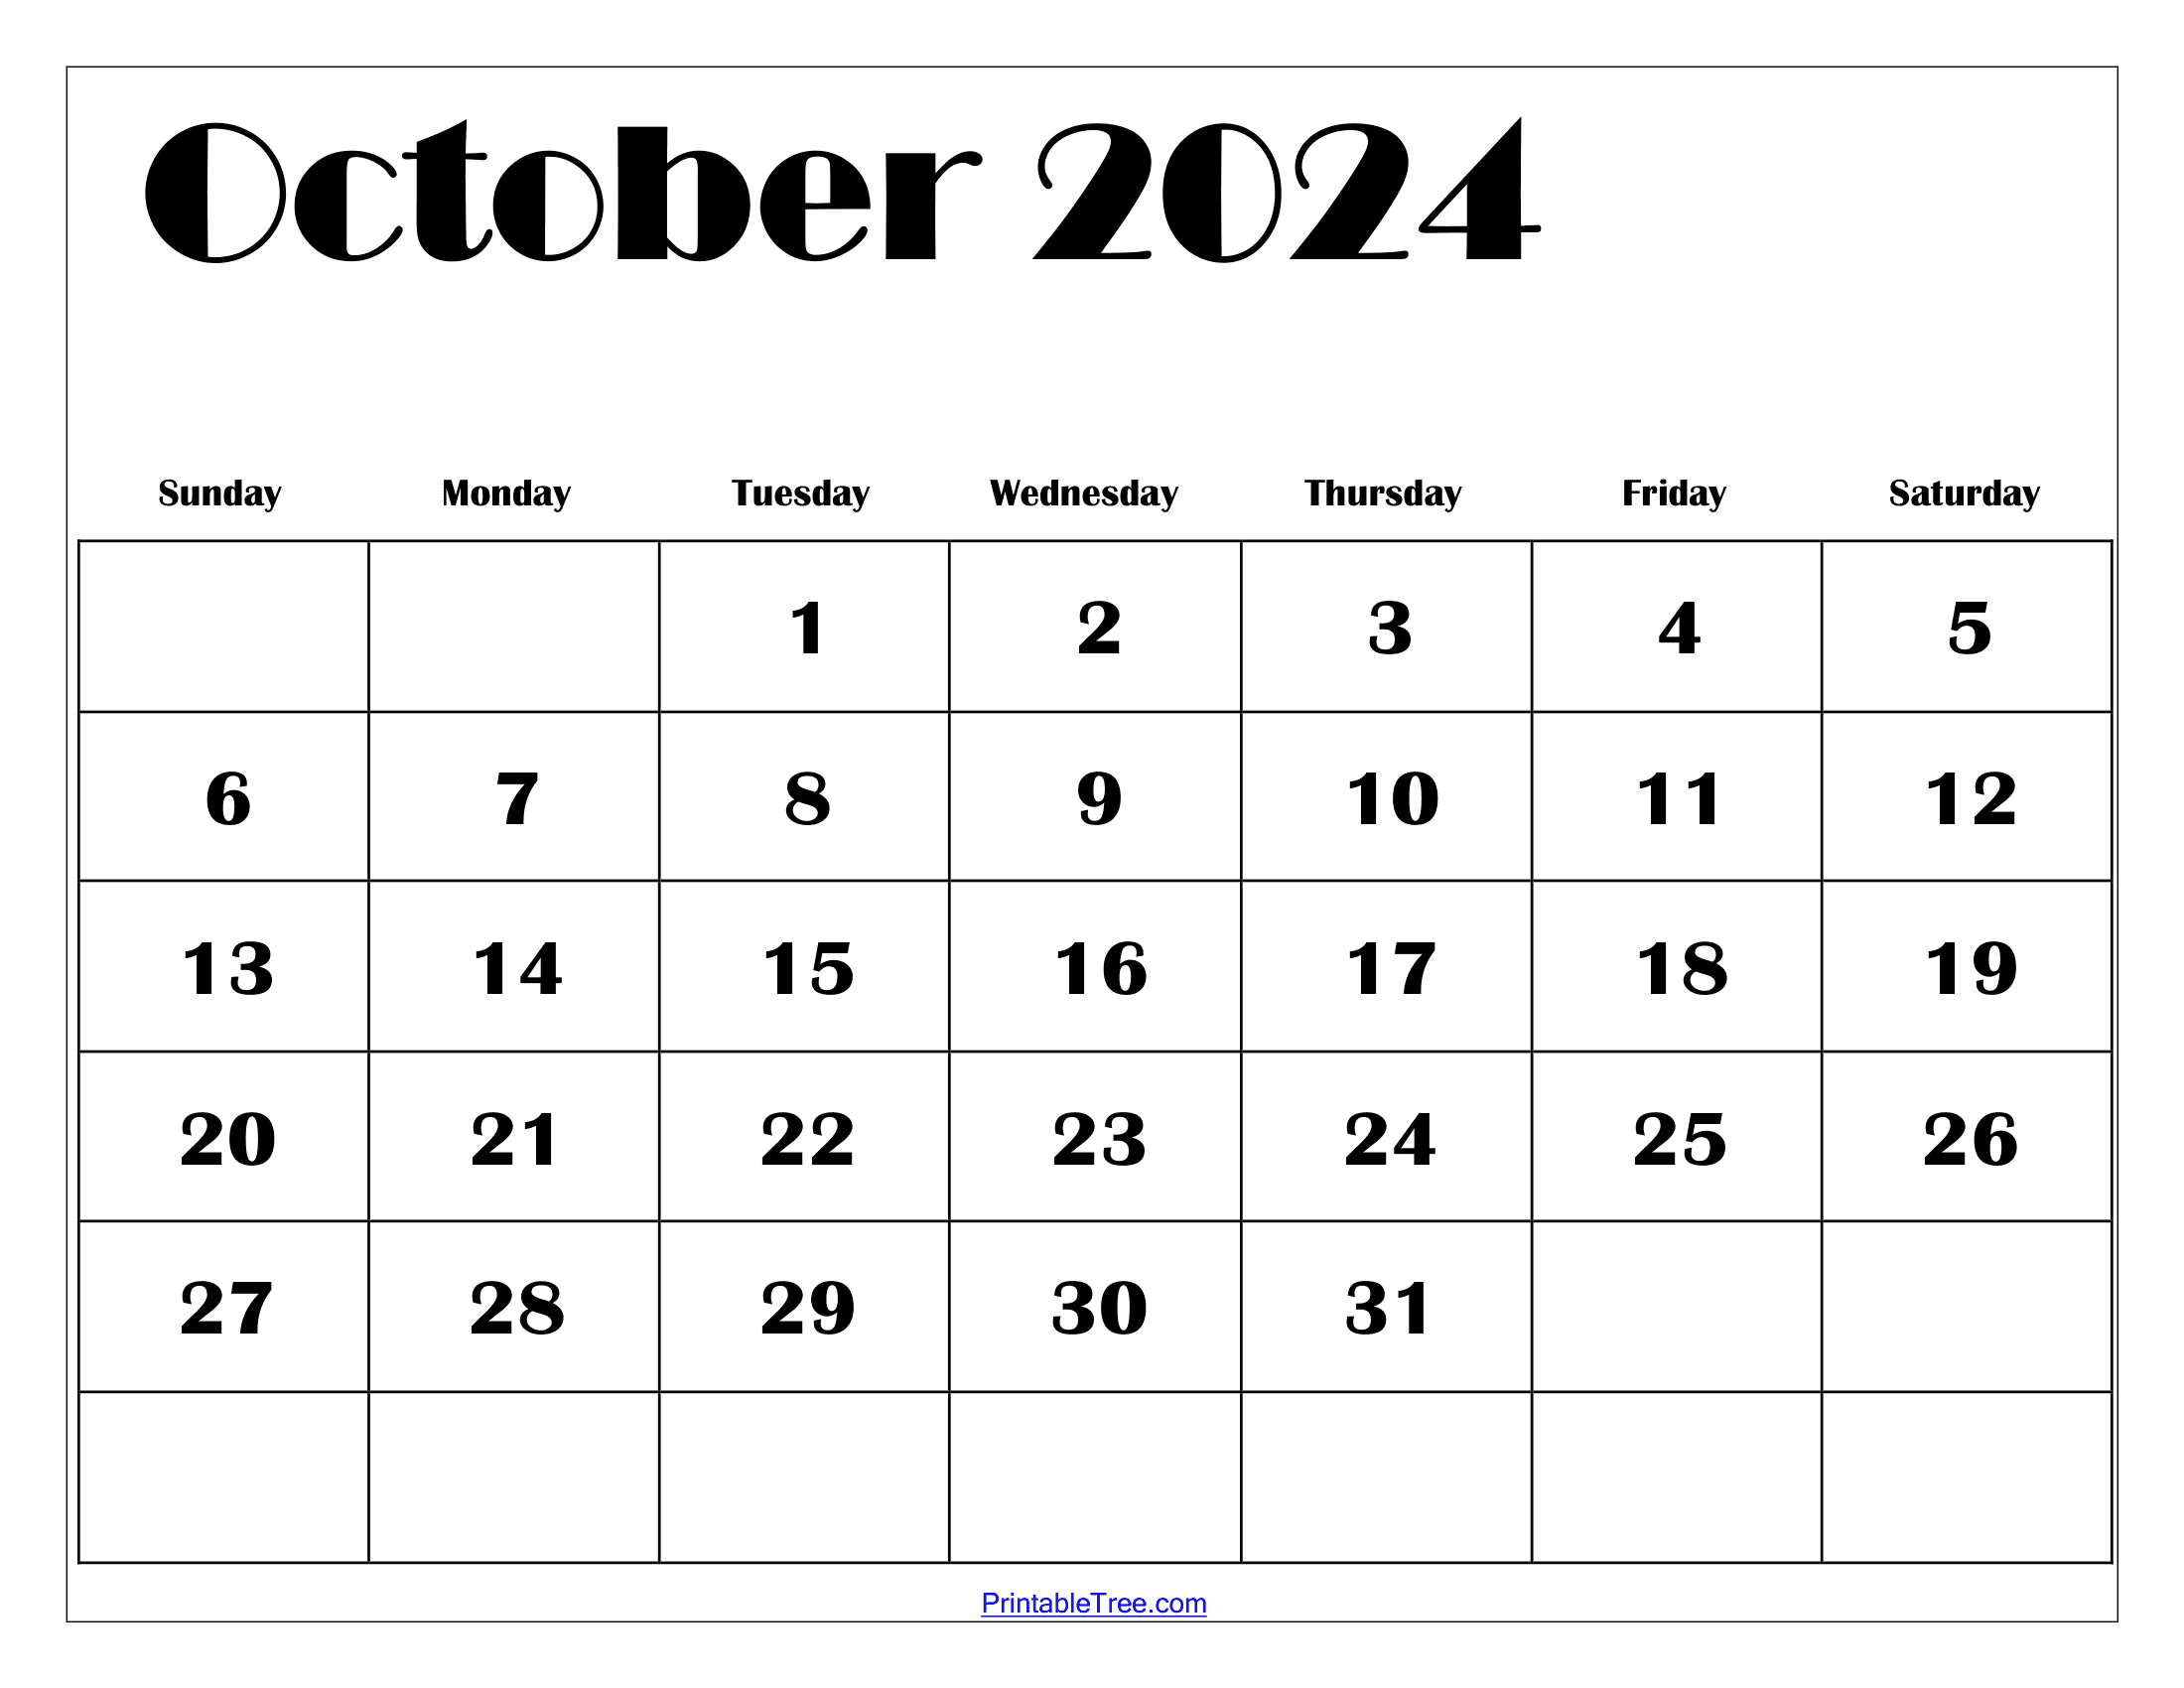 Ooctober 2024 Calendar Eilis Harlene